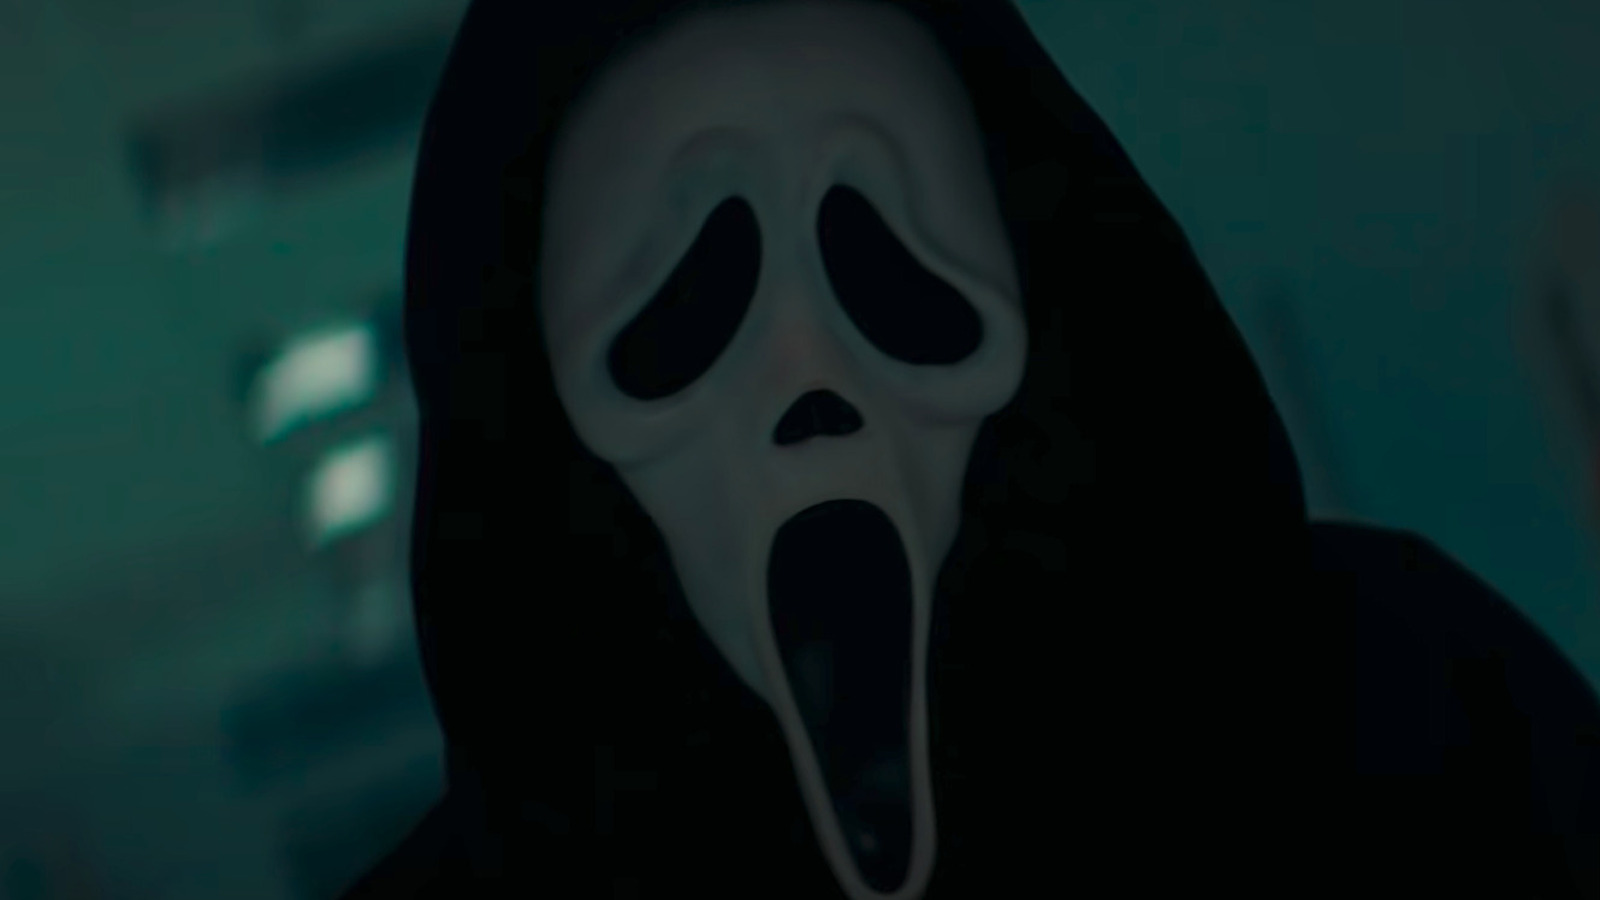 Scream Ghost LV